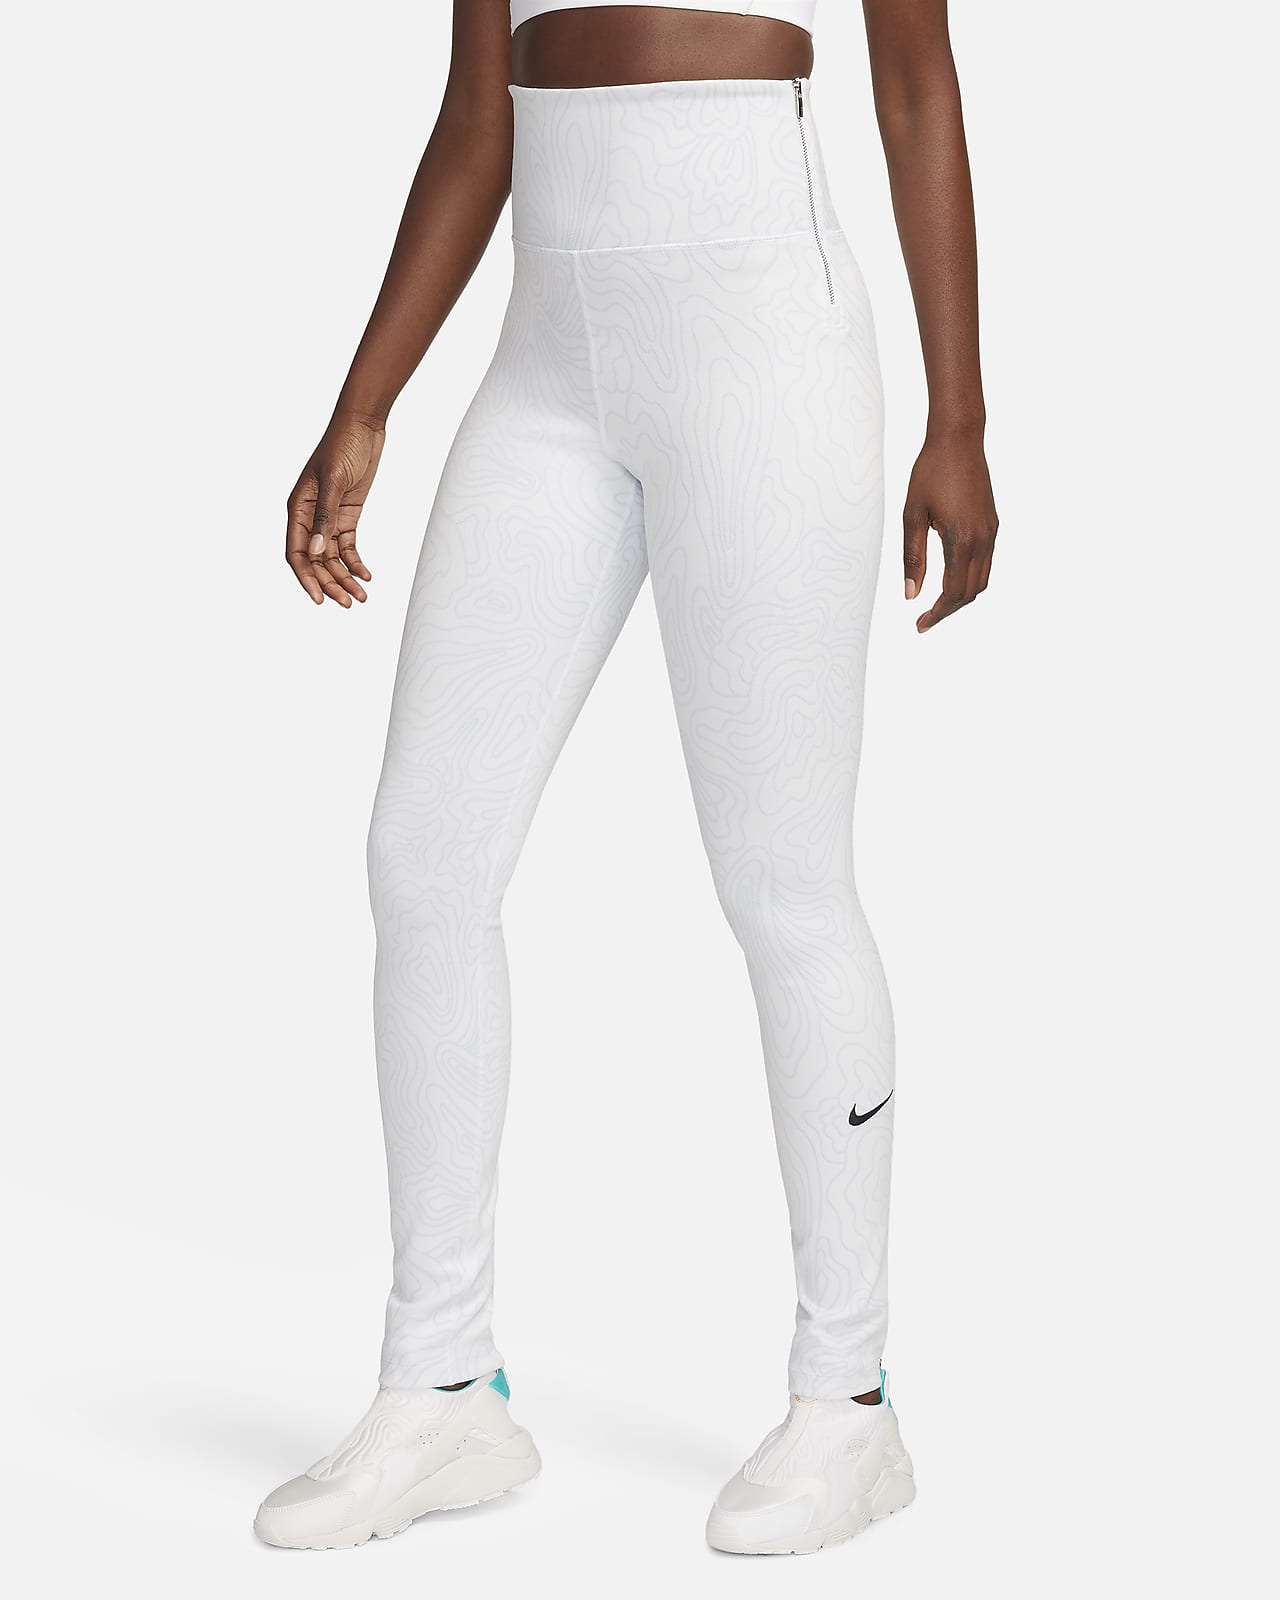 Pants de tejido Knit en jacquard para mujer Serena Williams Design Crew